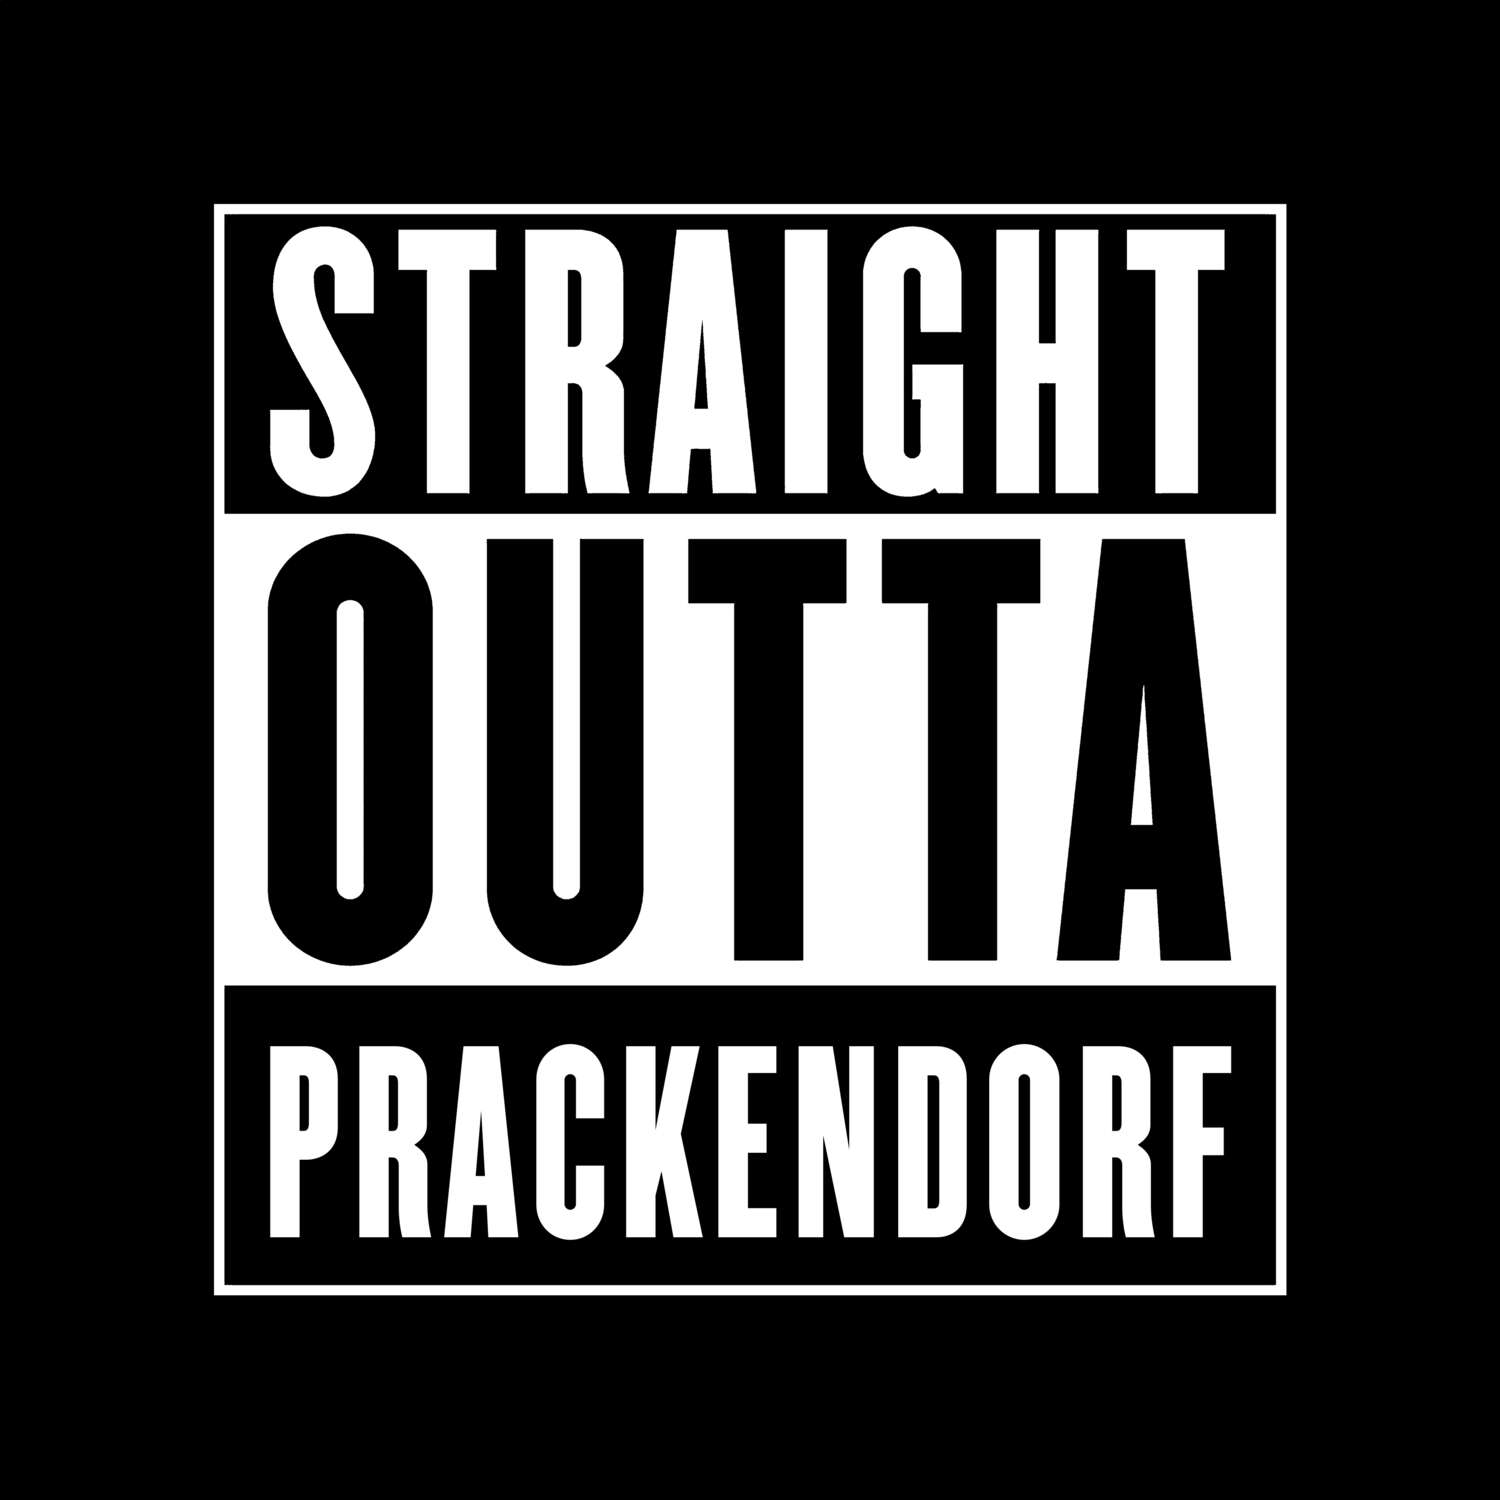 Prackendorf T-Shirt »Straight Outta«